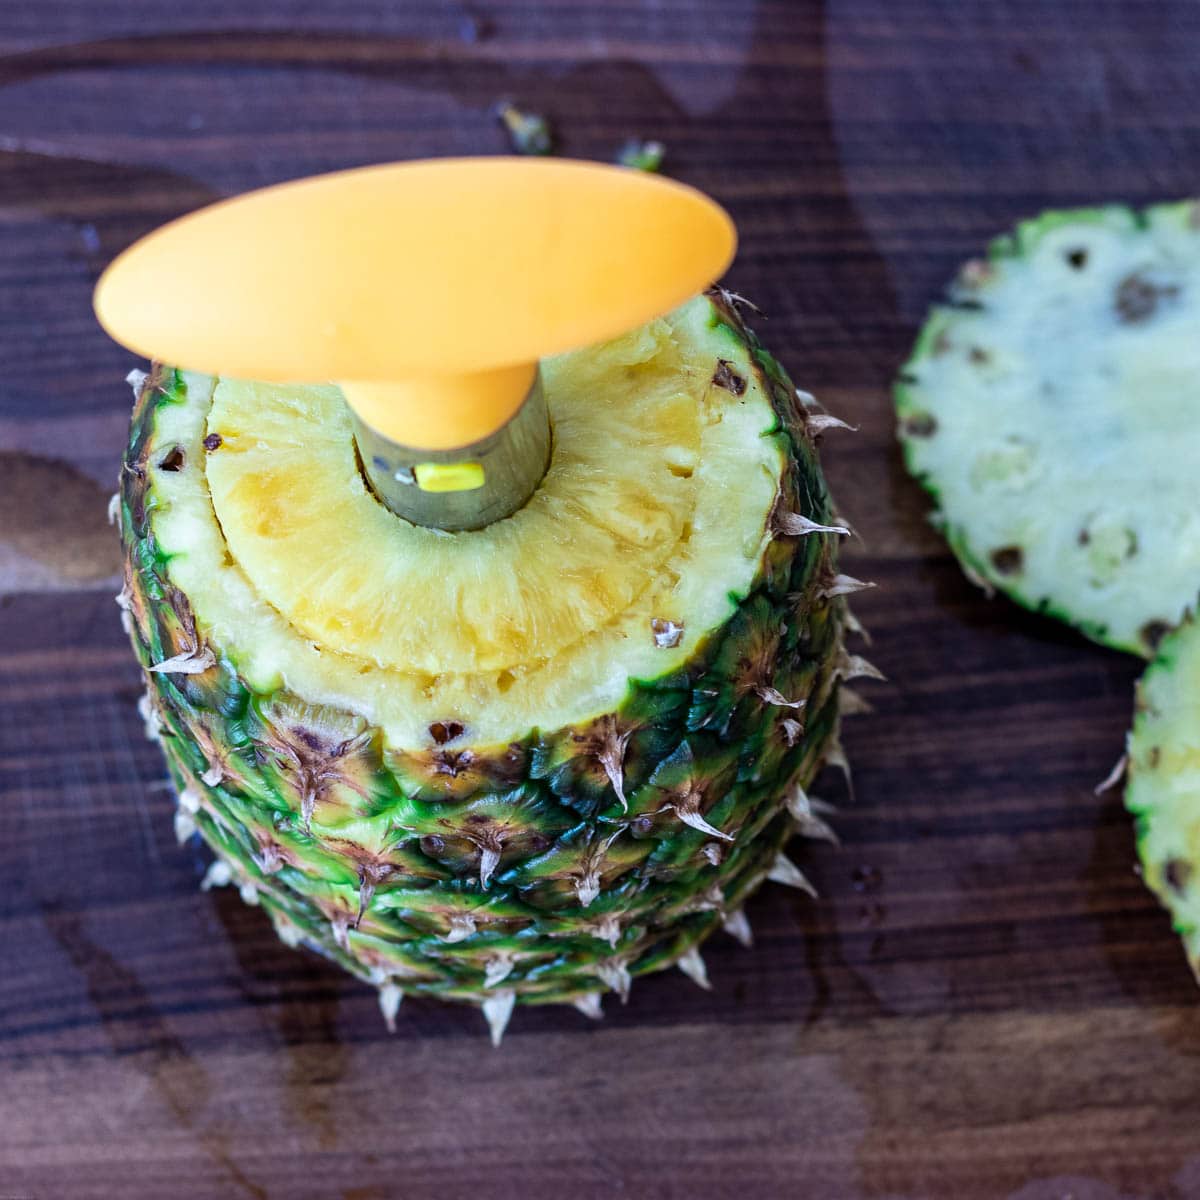 Pineapple corer in a pineapple.